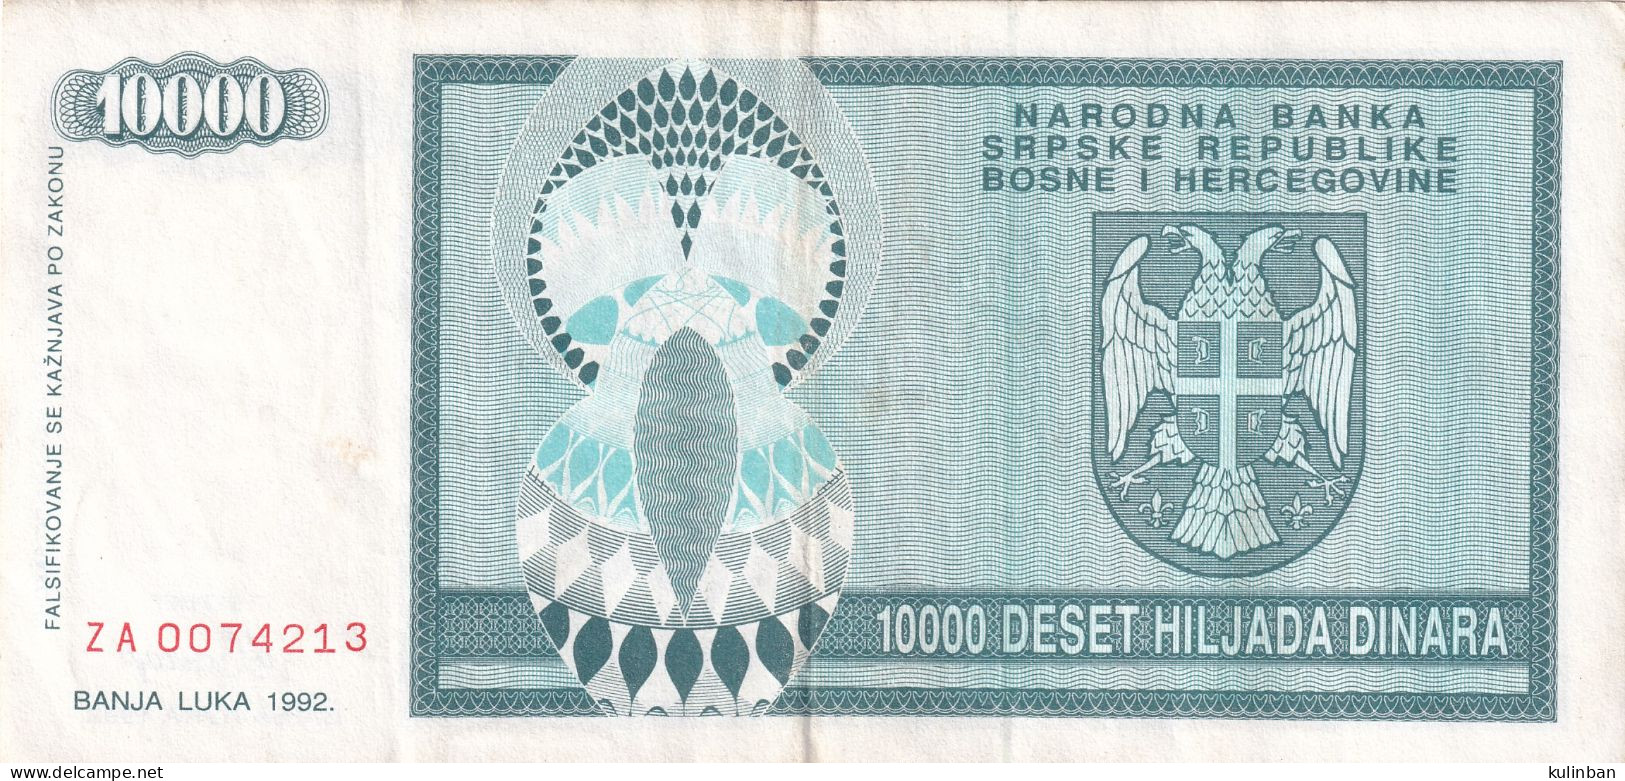 BOSNIA AND HERZEGOVINA, Replacement Banknote, ZA 0074213. P-139d,VF, 10.000 DINARA,  BANJA LUKA 1992. - Bosnien-Herzegowina